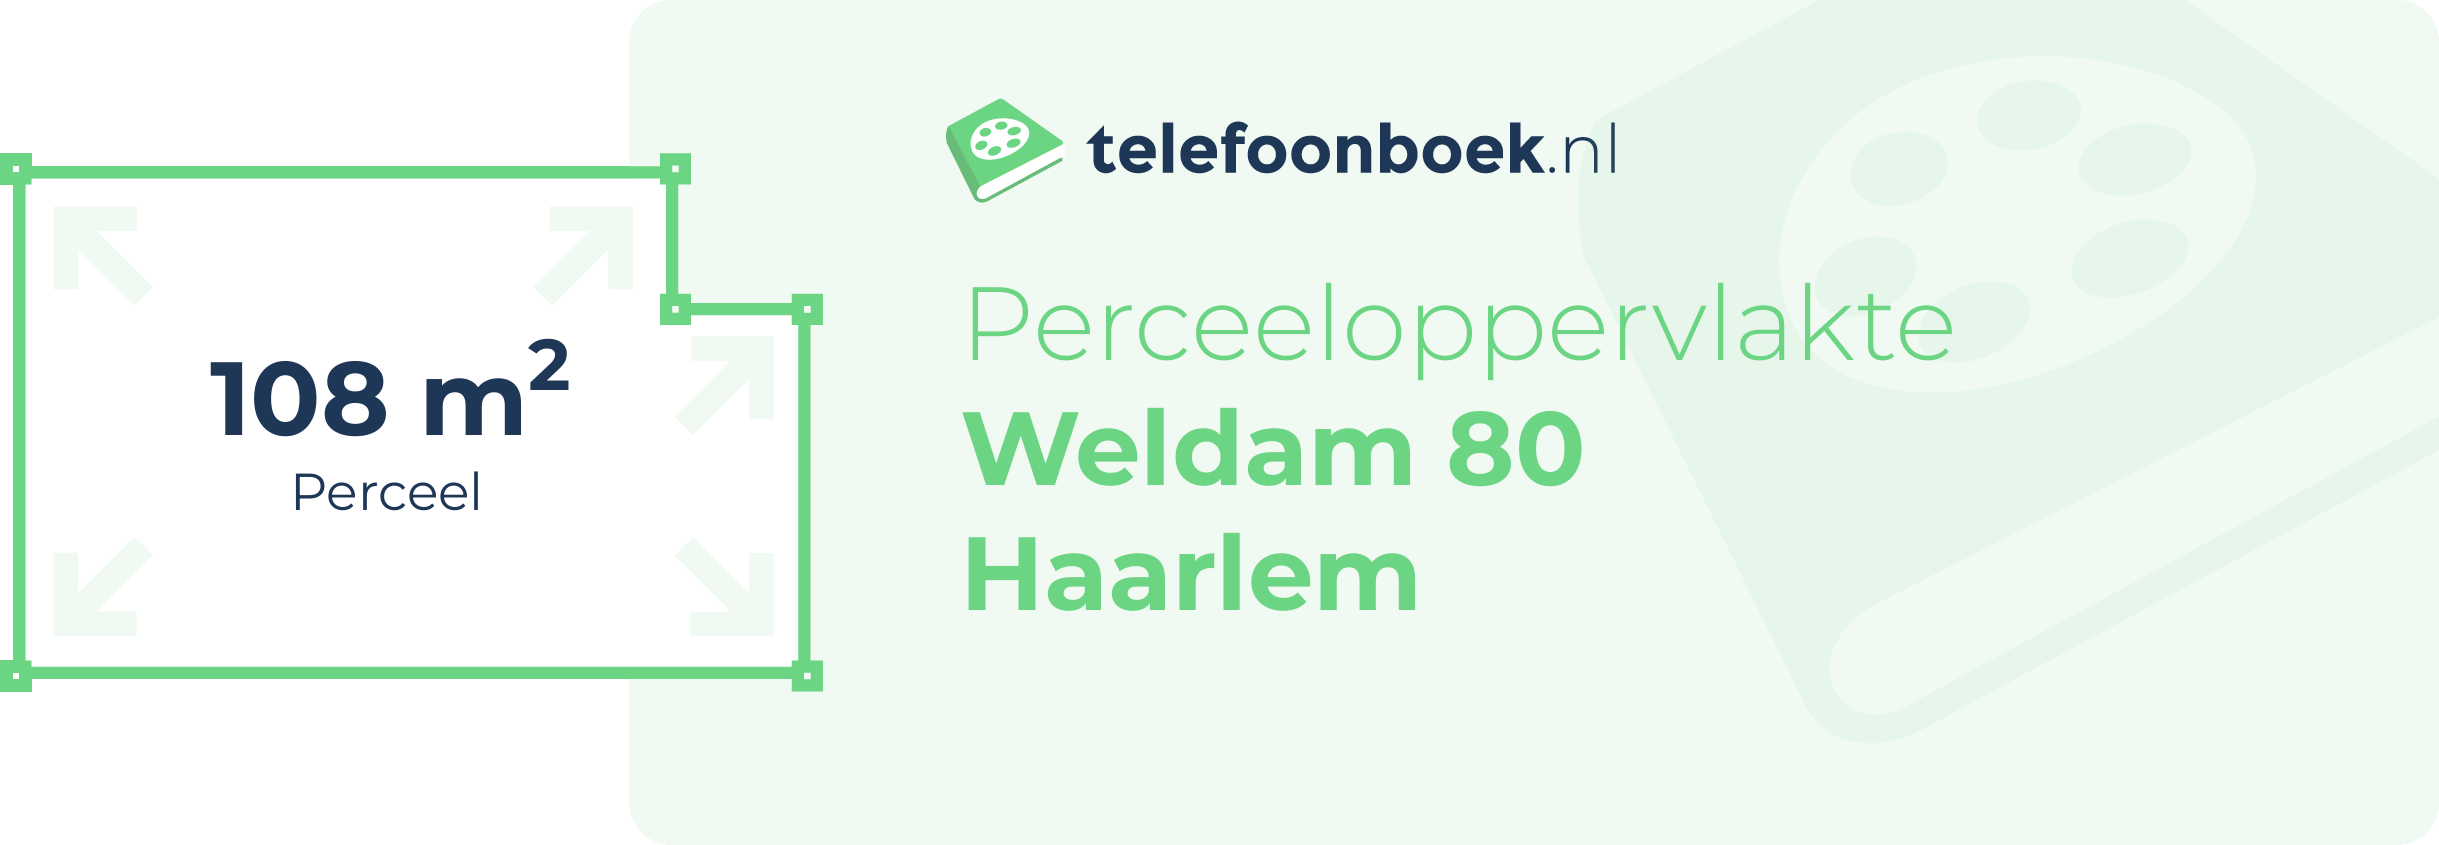 Perceeloppervlakte Weldam 80 Haarlem